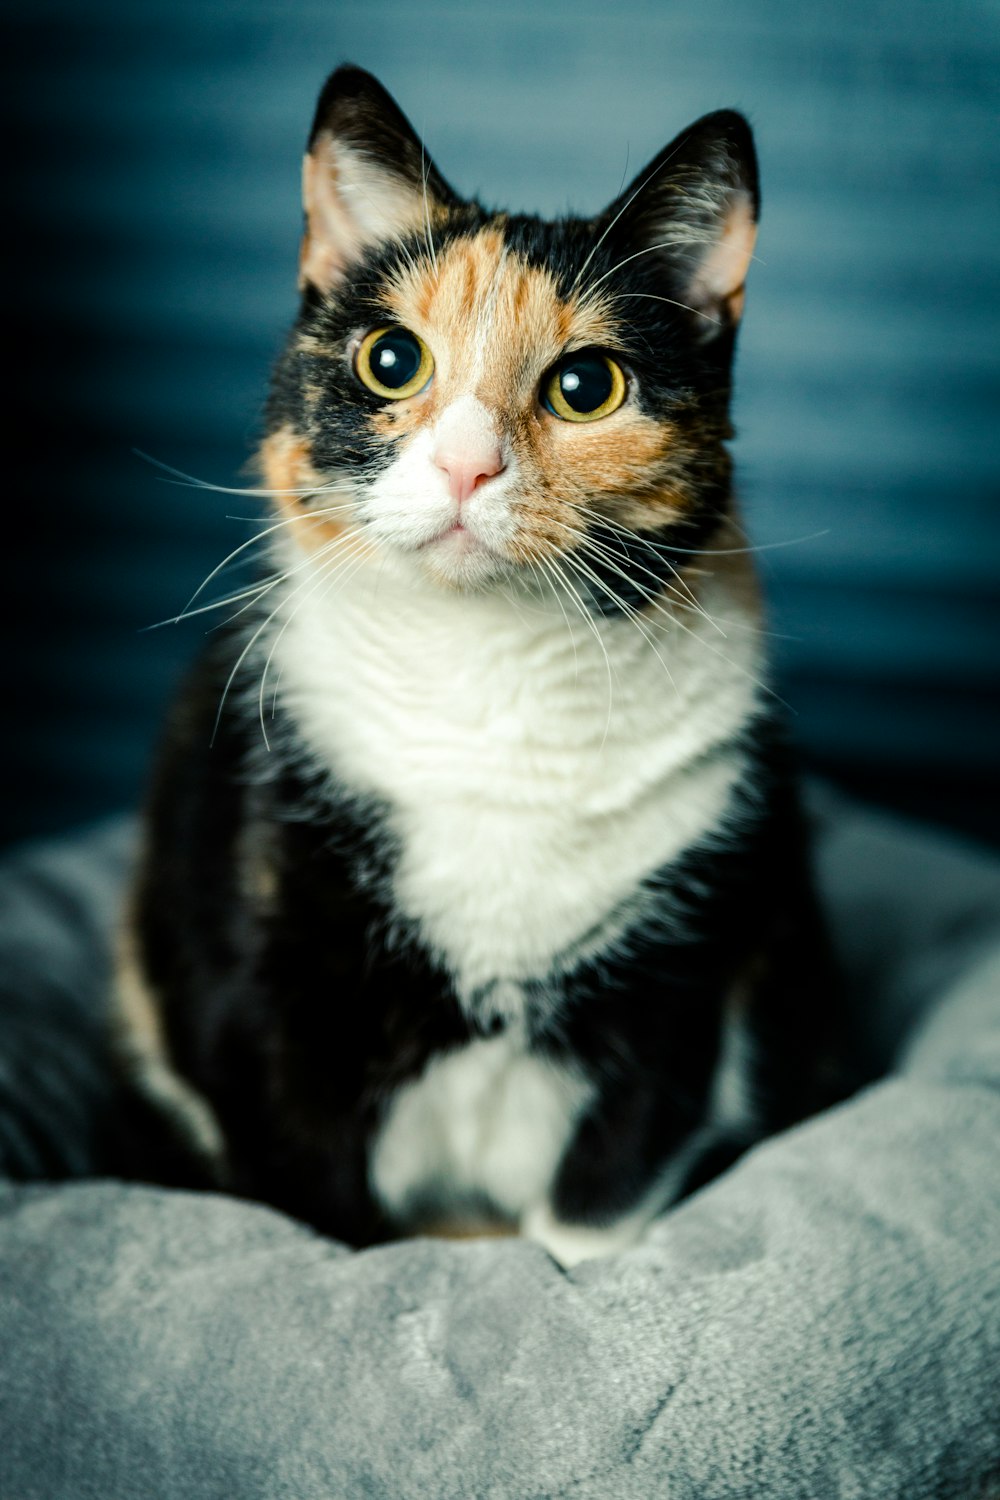 calico cat on gray textile